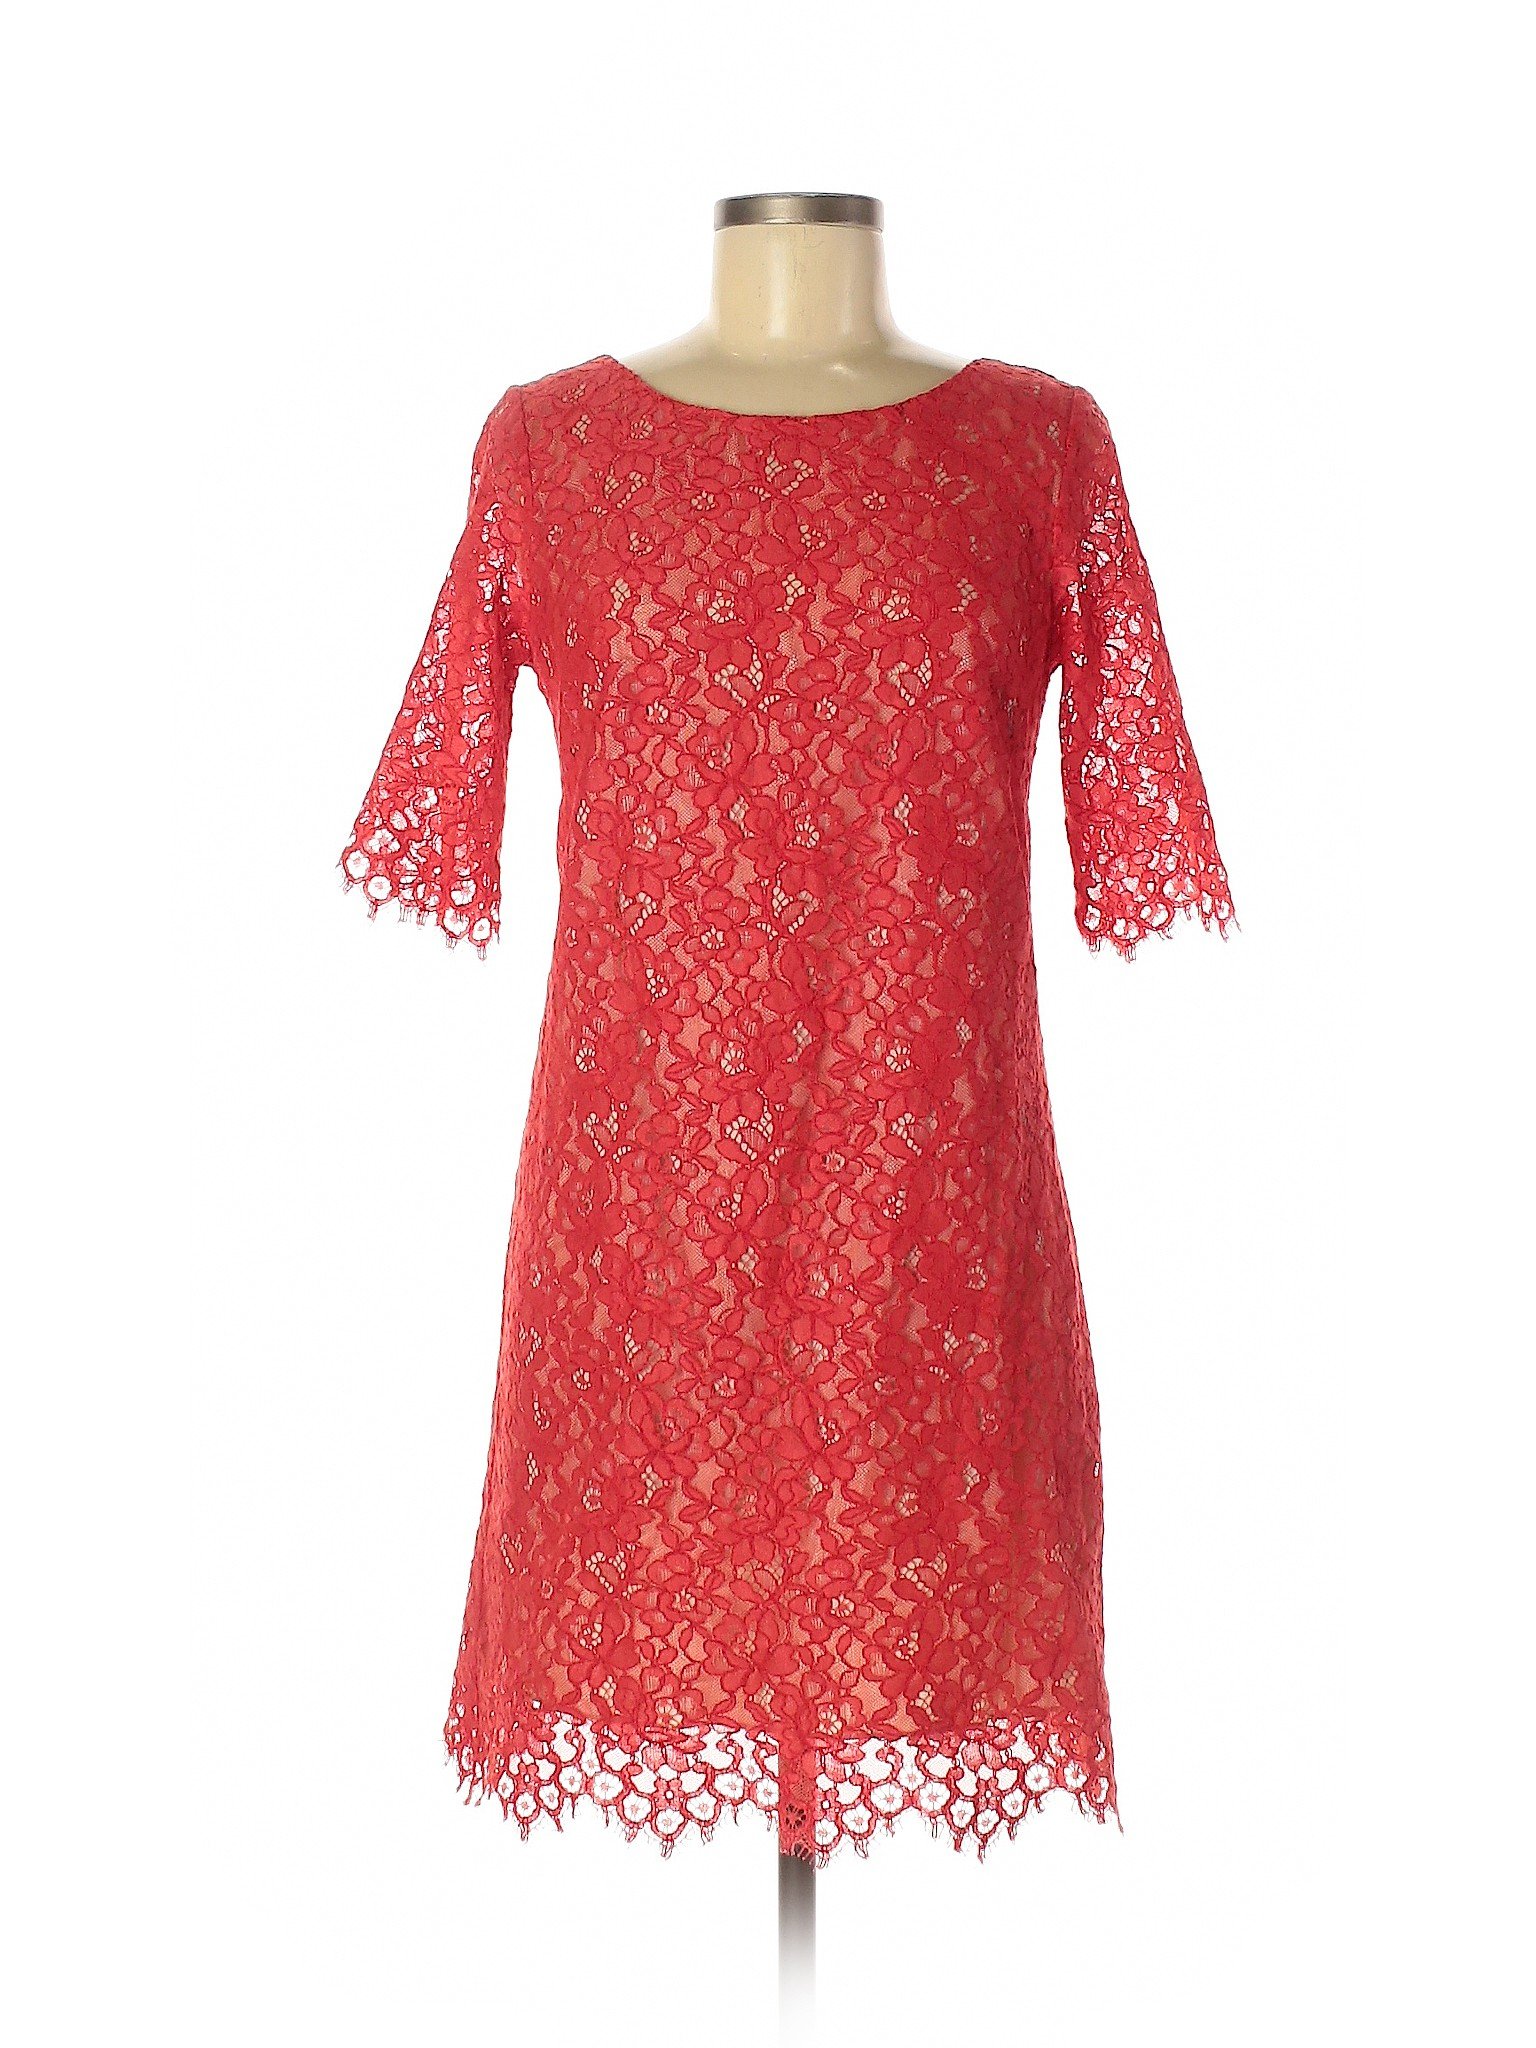 Shoshanna Women Red Cocktail Dress 6 | eBay